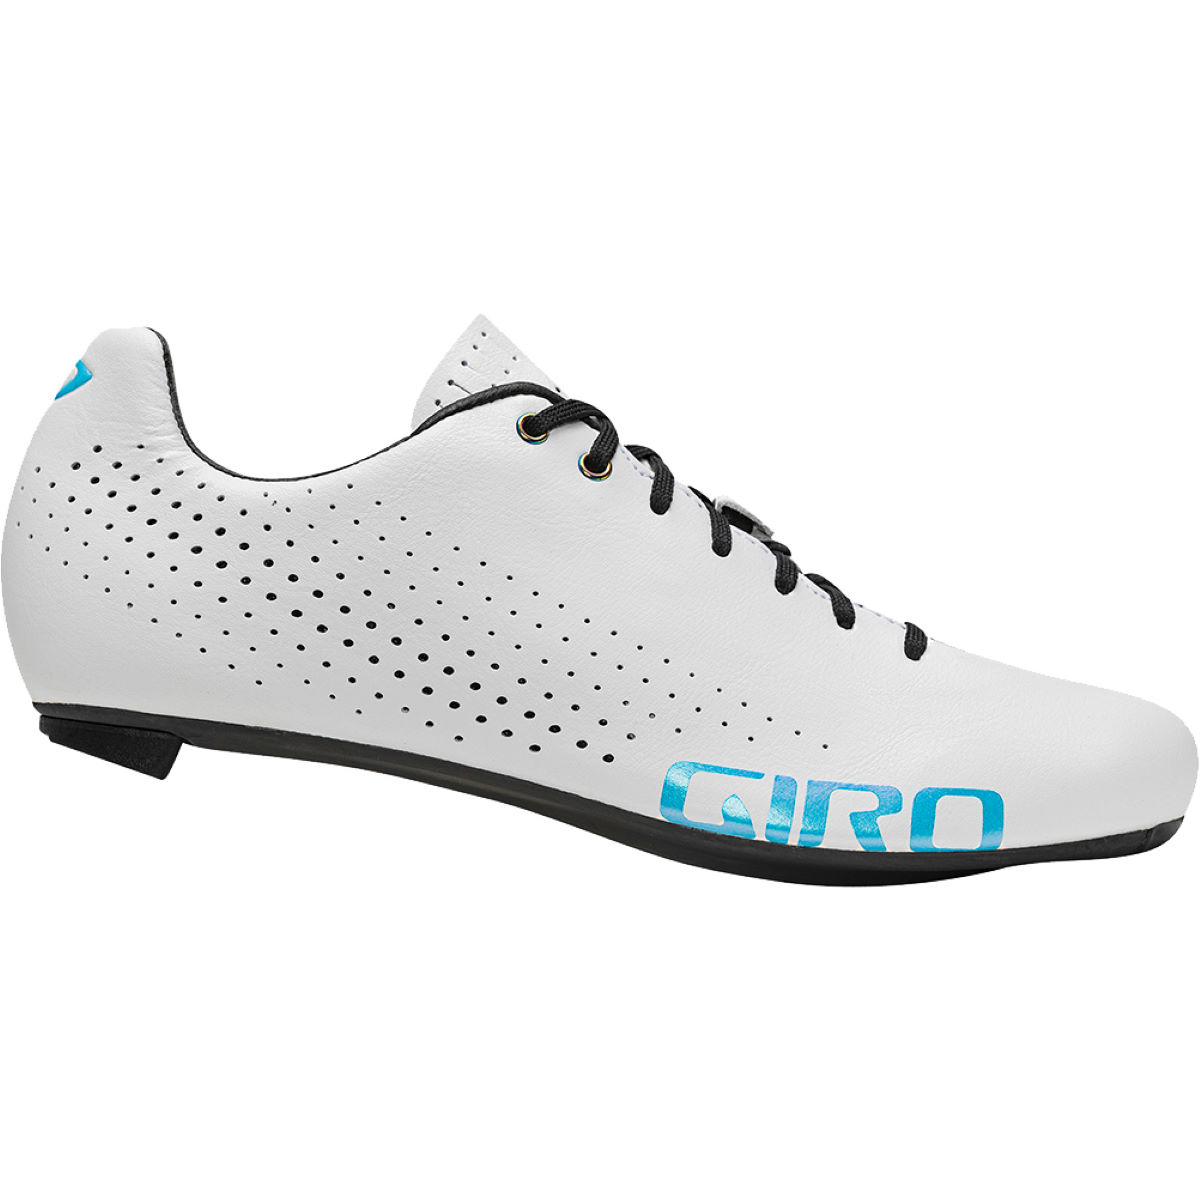 Zapatillas de carretera Giro Empire para mujer (2020) - Zapatillas de ciclismo